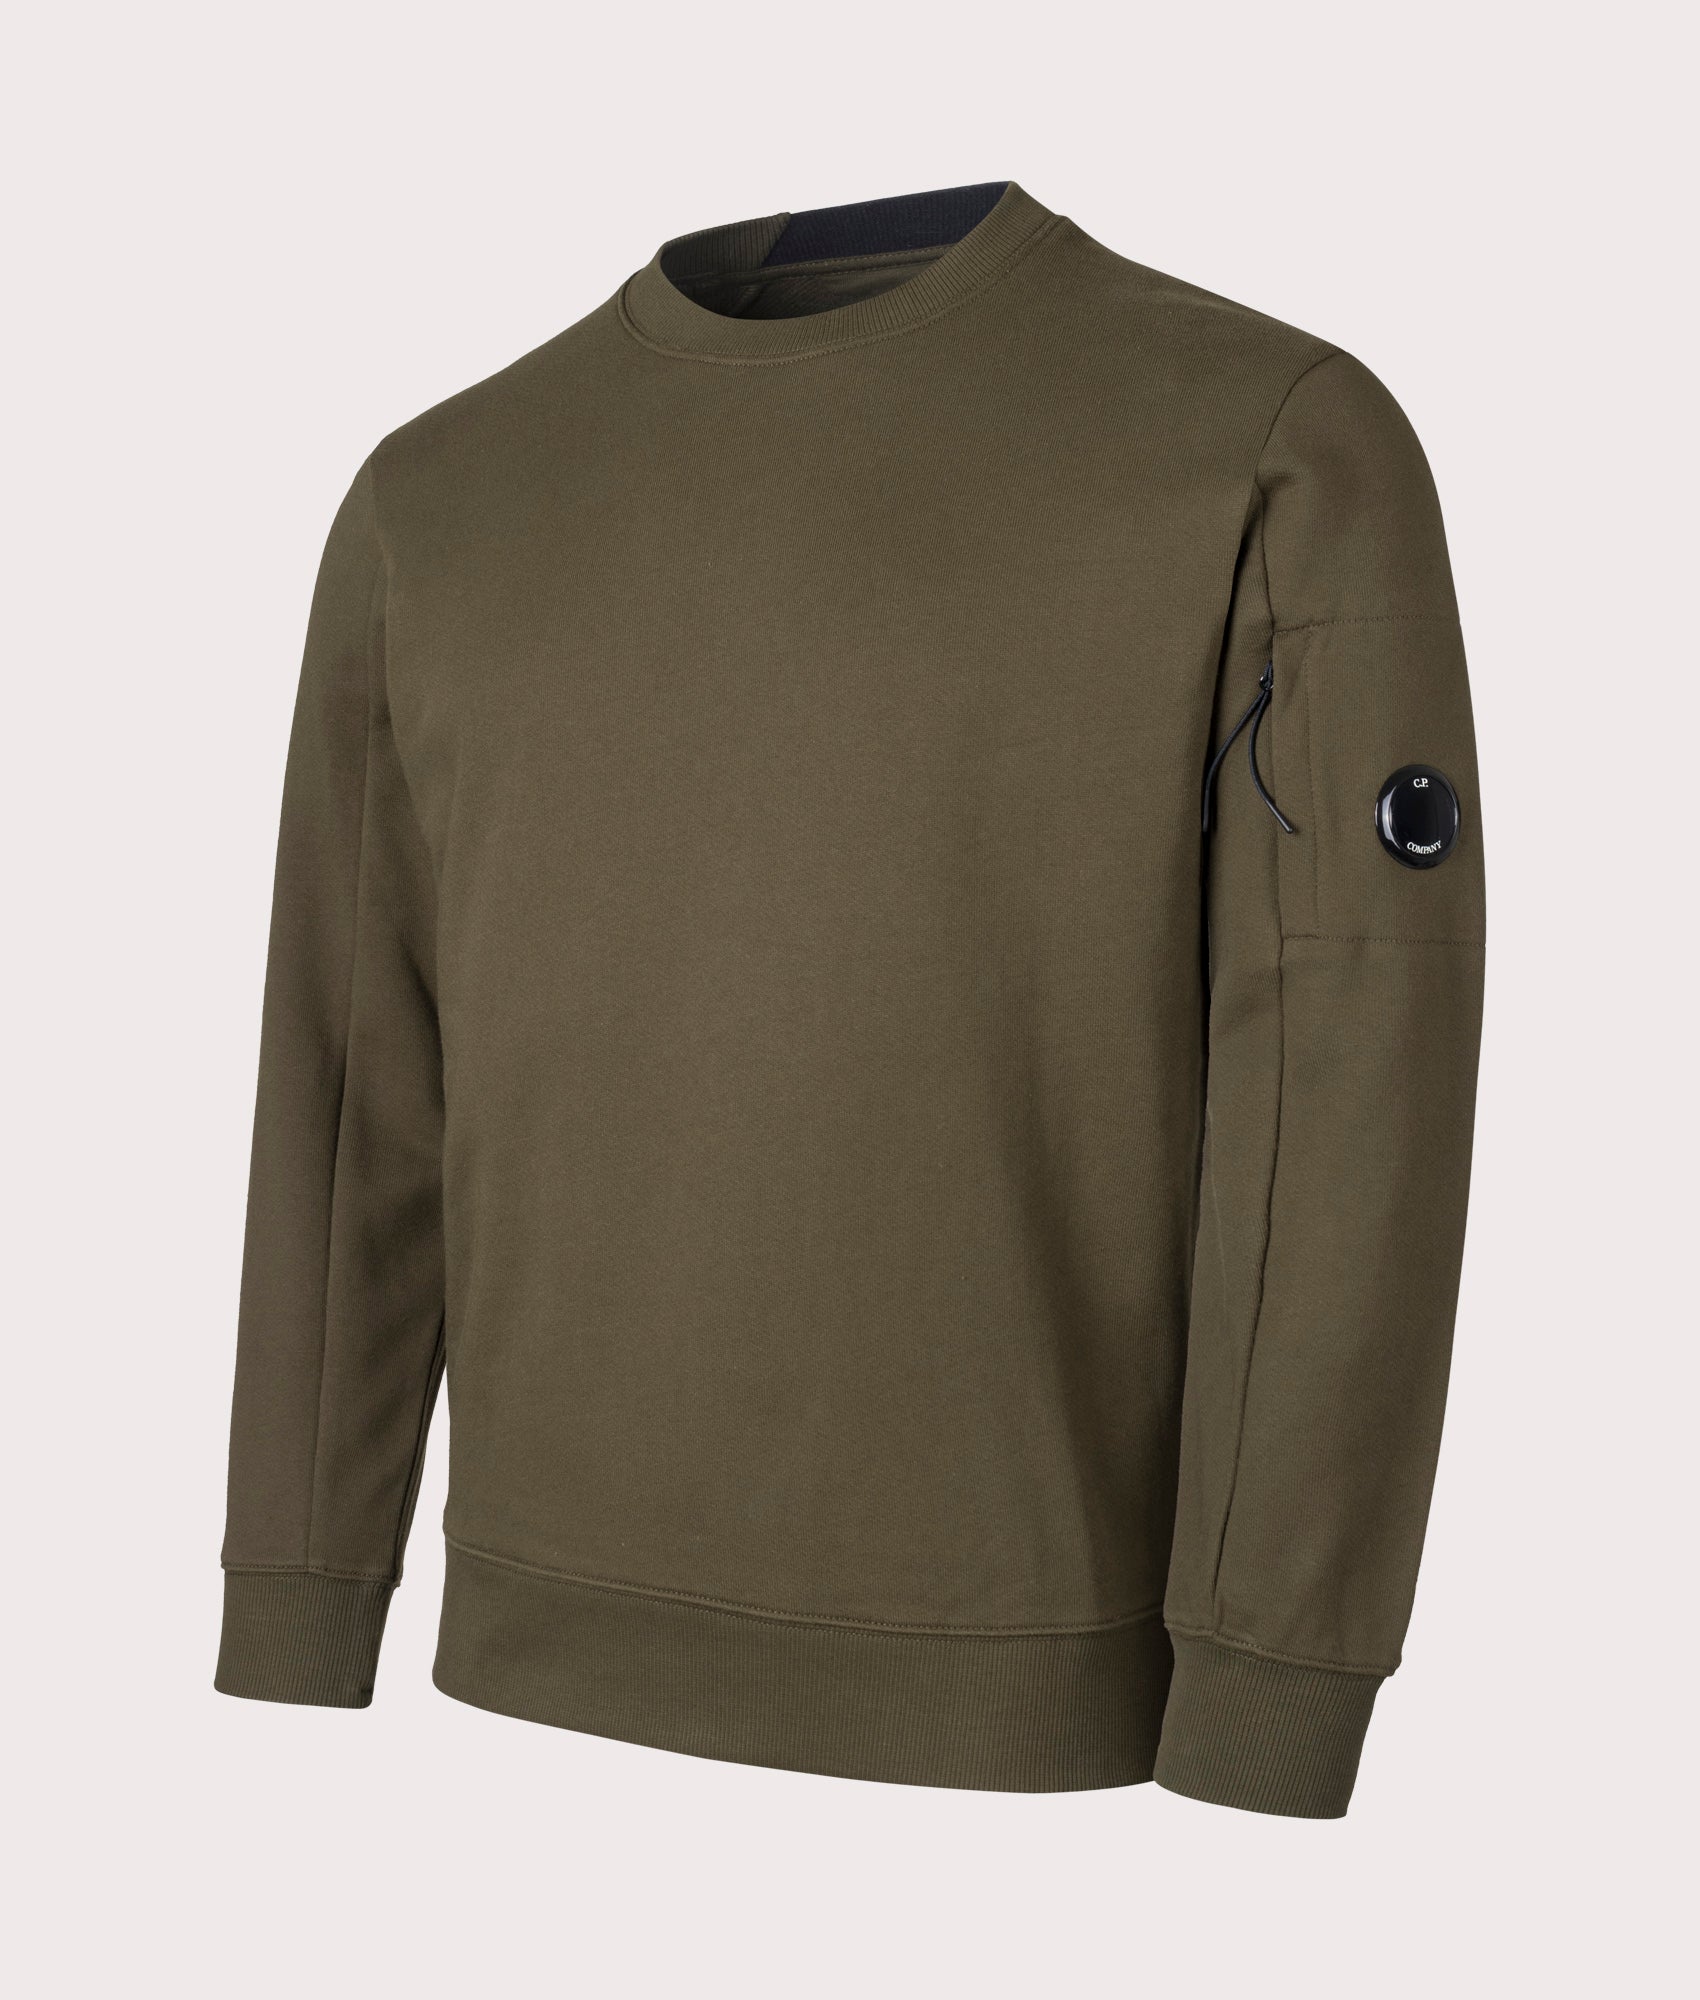 C.P. Company Mens Diagonal Raised Fleece Sweatshirt - Colour: 683 Ivy Green - Size: Medium